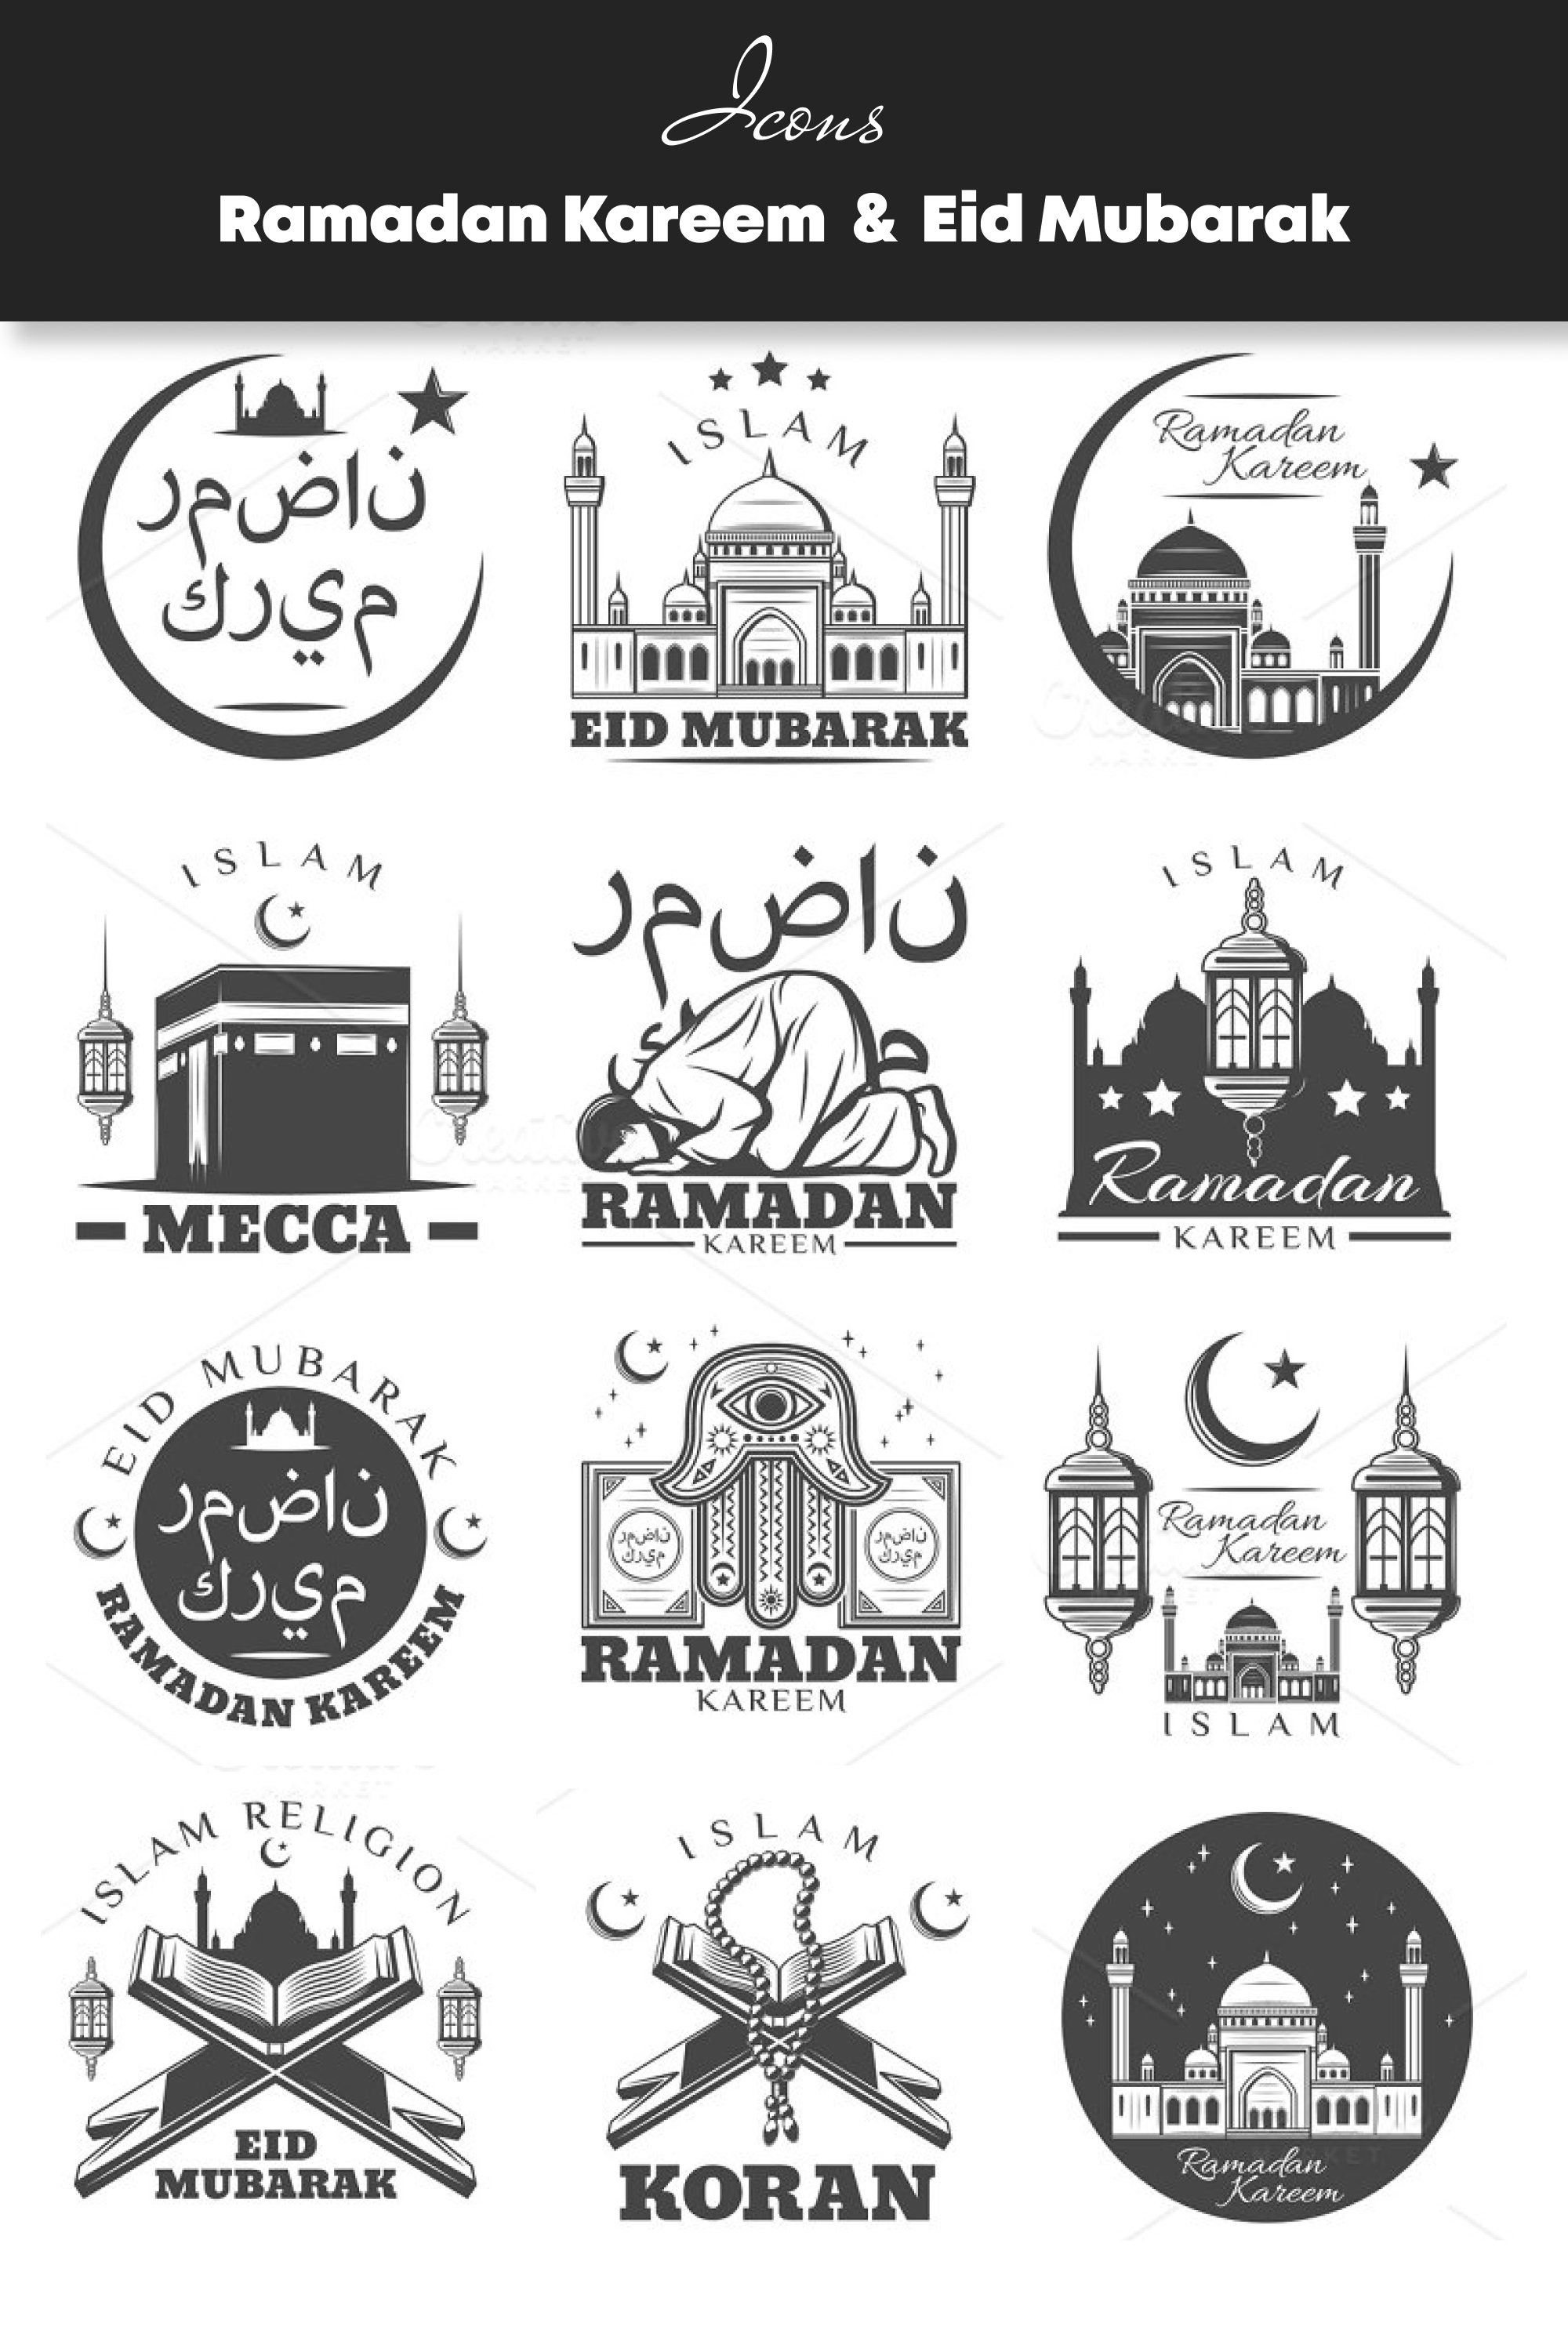 Ramadan kareem and eid mubarak icons of pinterest.